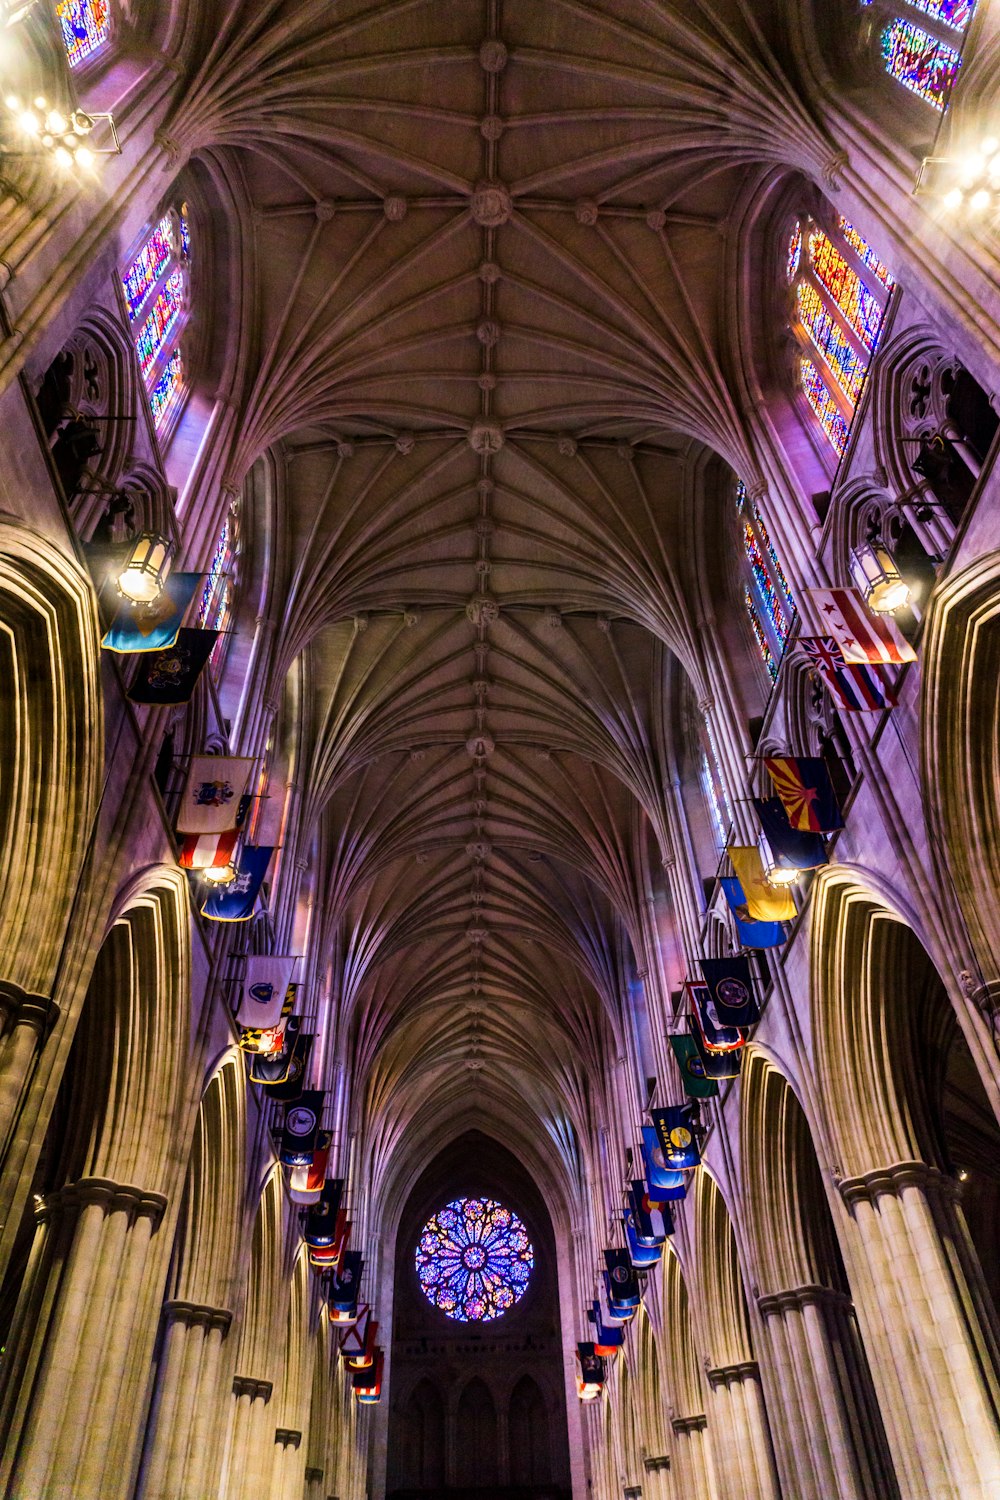 fotografia interior de baixo ângulo da catedral com vitrais multicoloridos